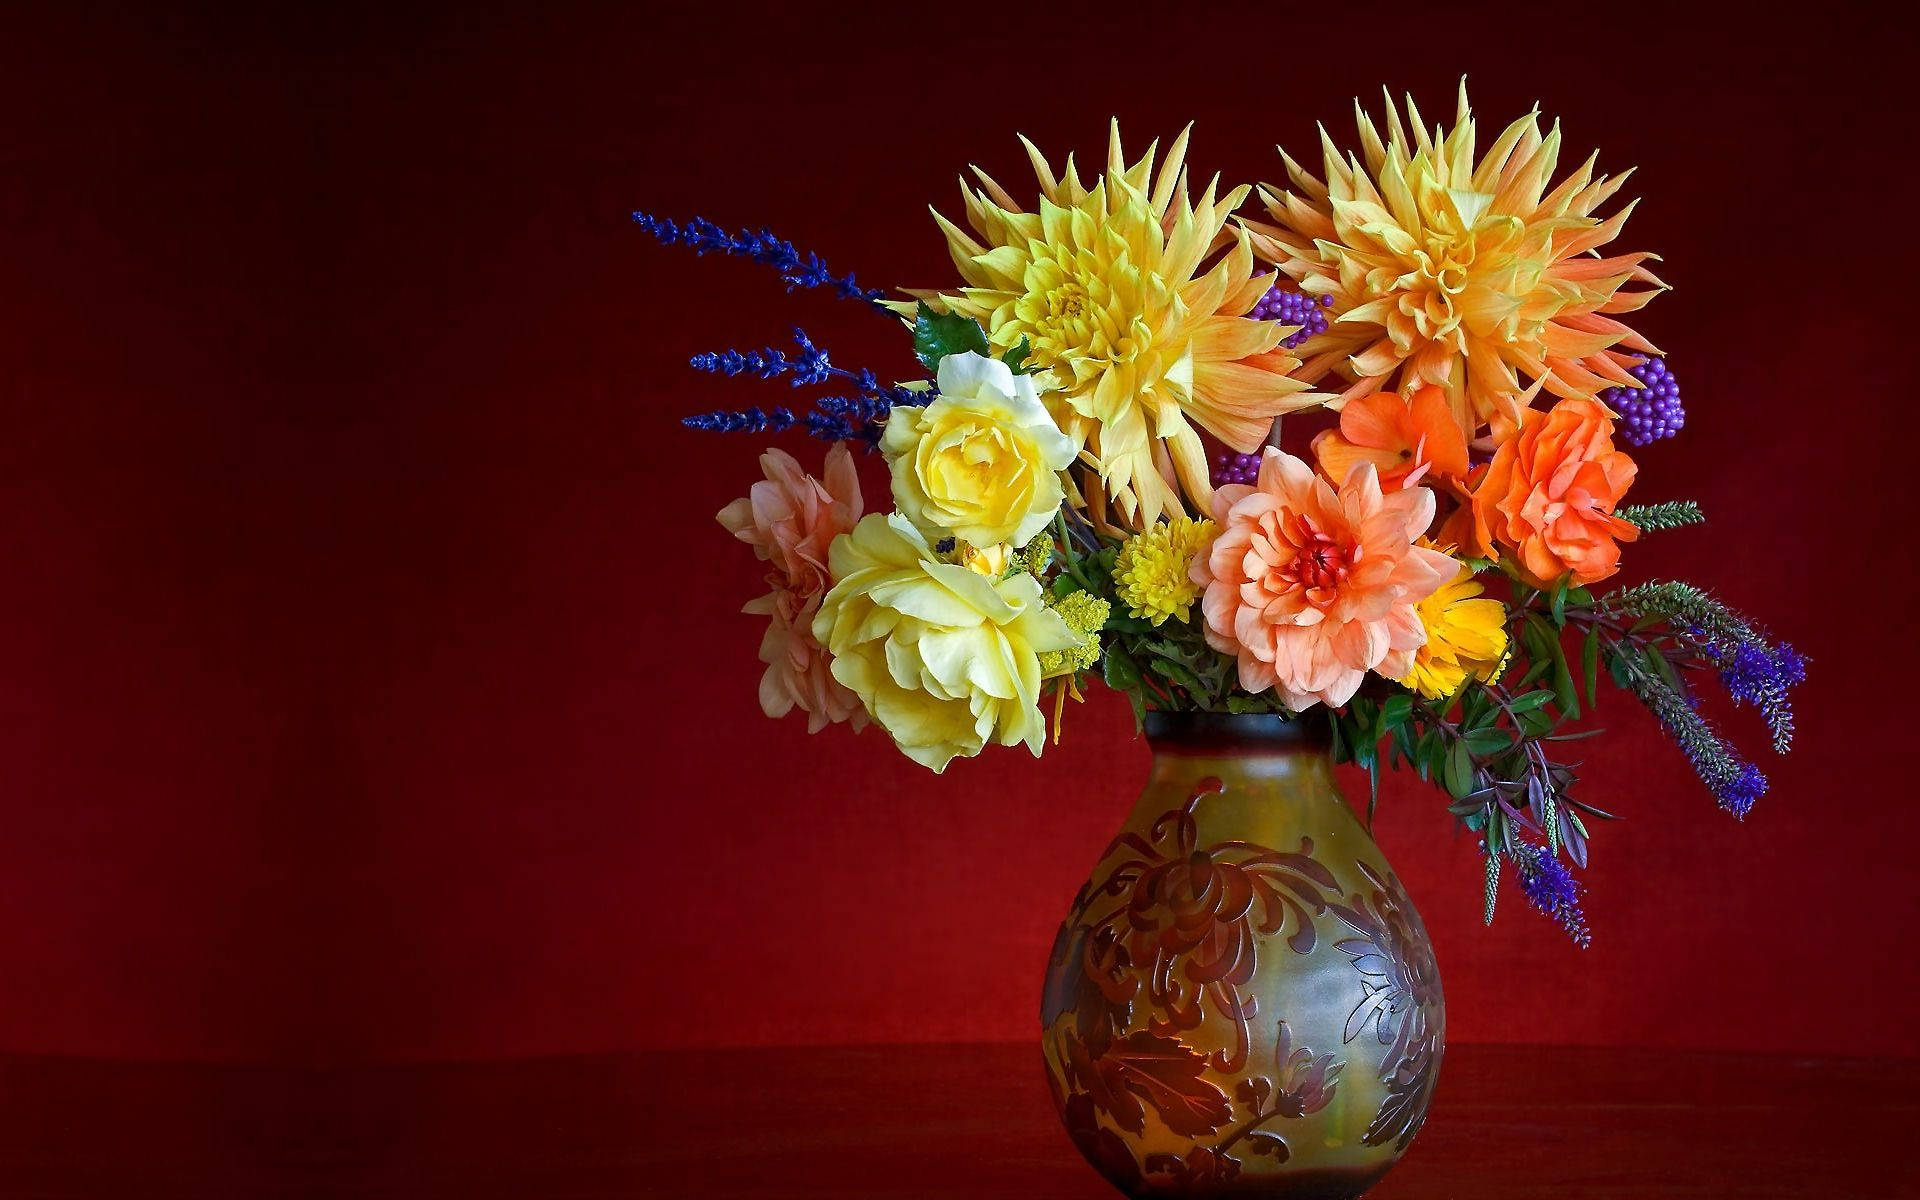 Free Flower Vase Wallpaper Downloads, [100+] Flower Vase Wallpapers for  FREE 